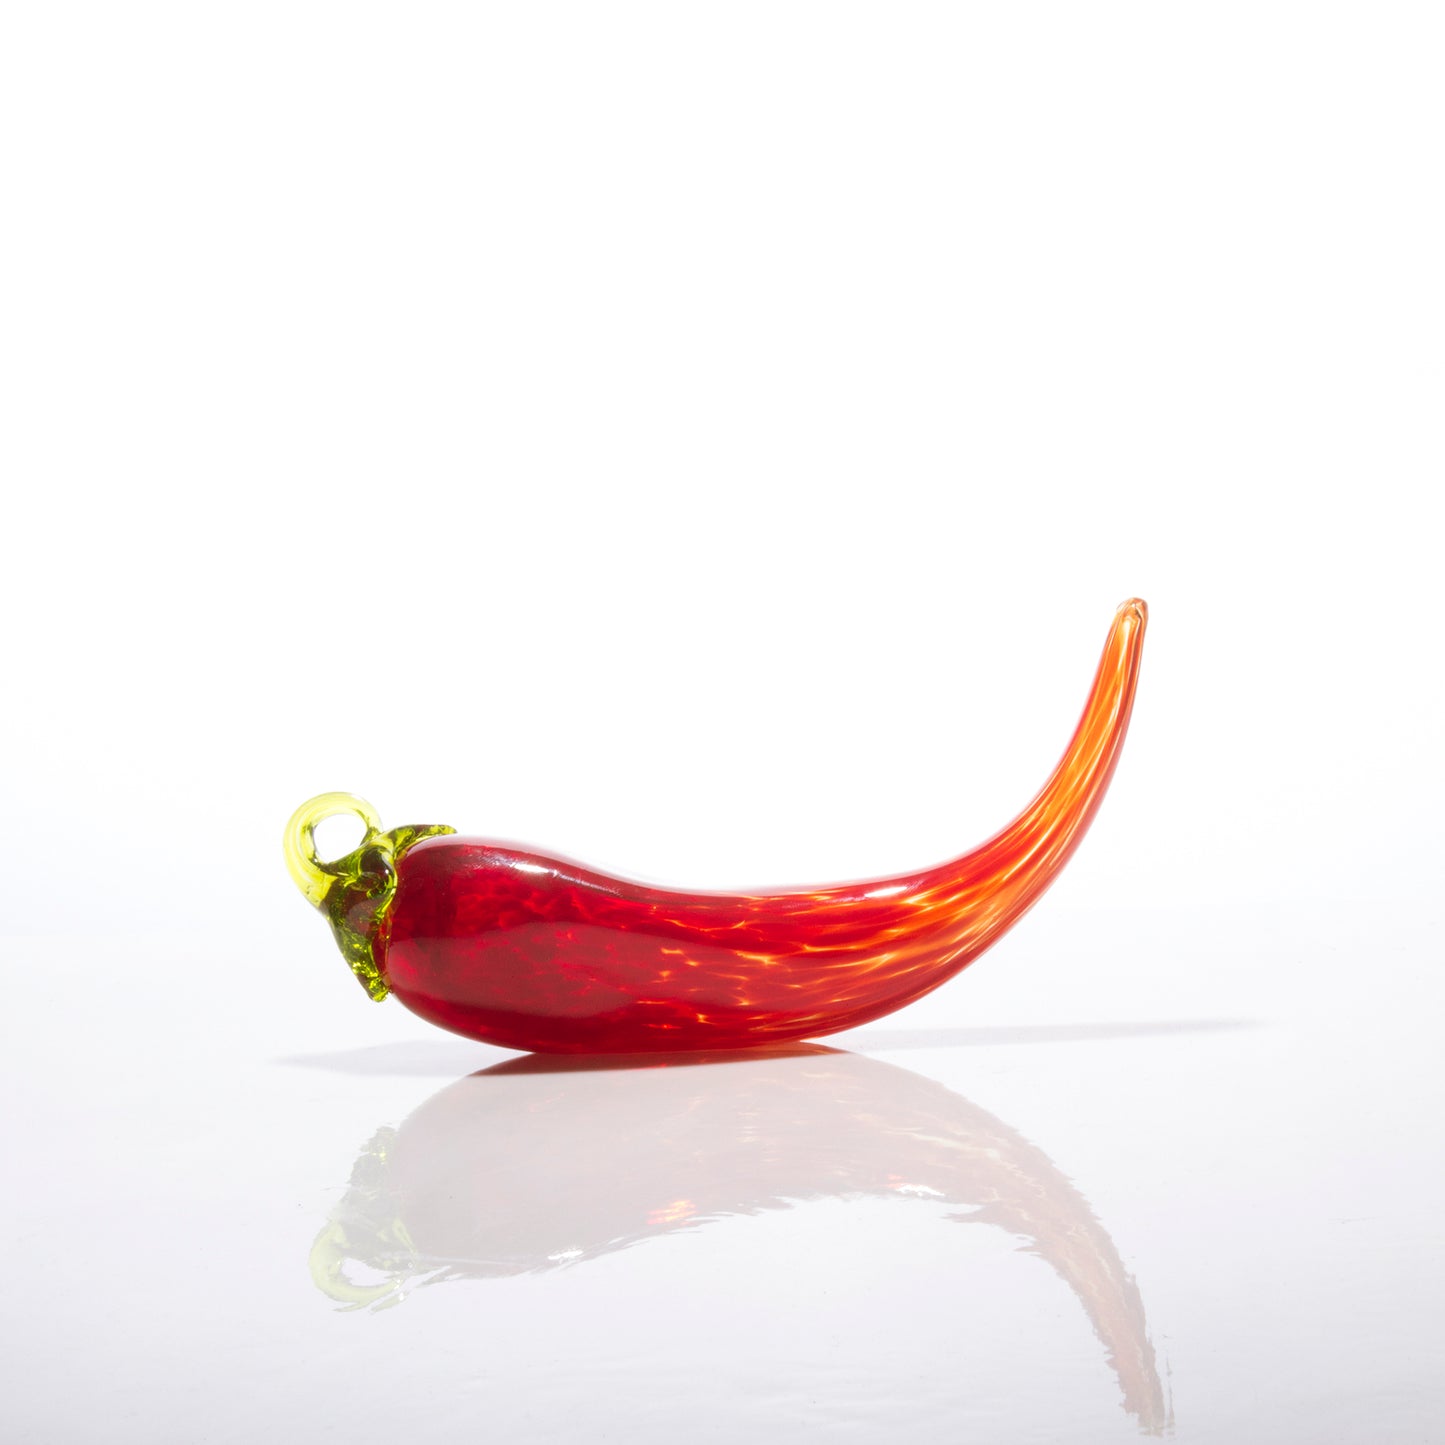 Chili Pepper - Red